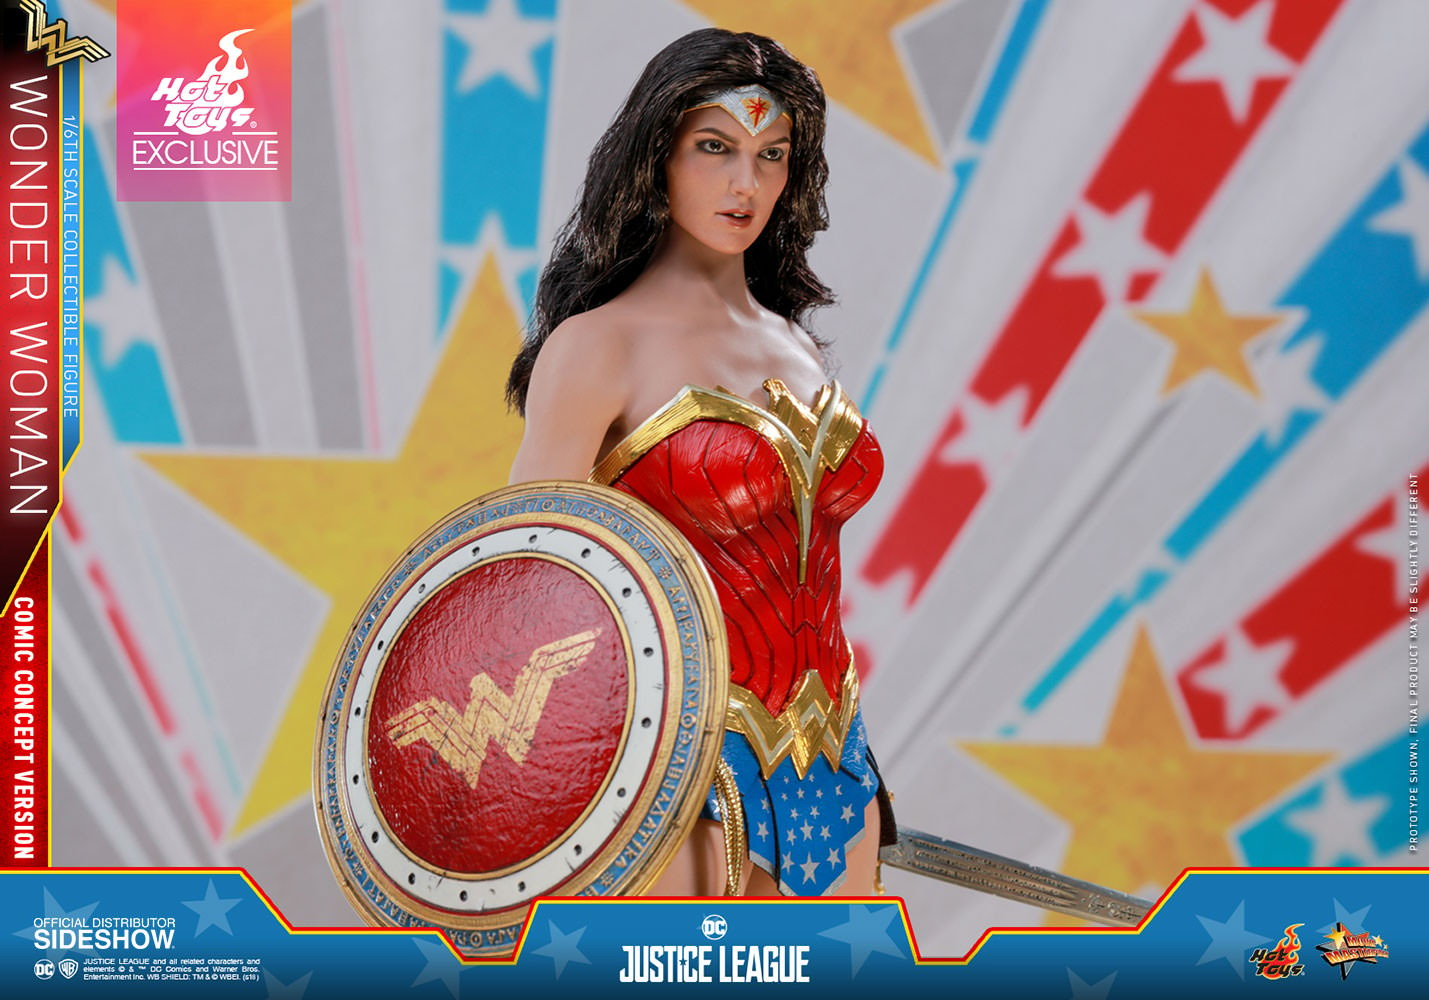 Wonder Woman Comic Concept Version Exclusive Edition (Prototype Shown) View 3